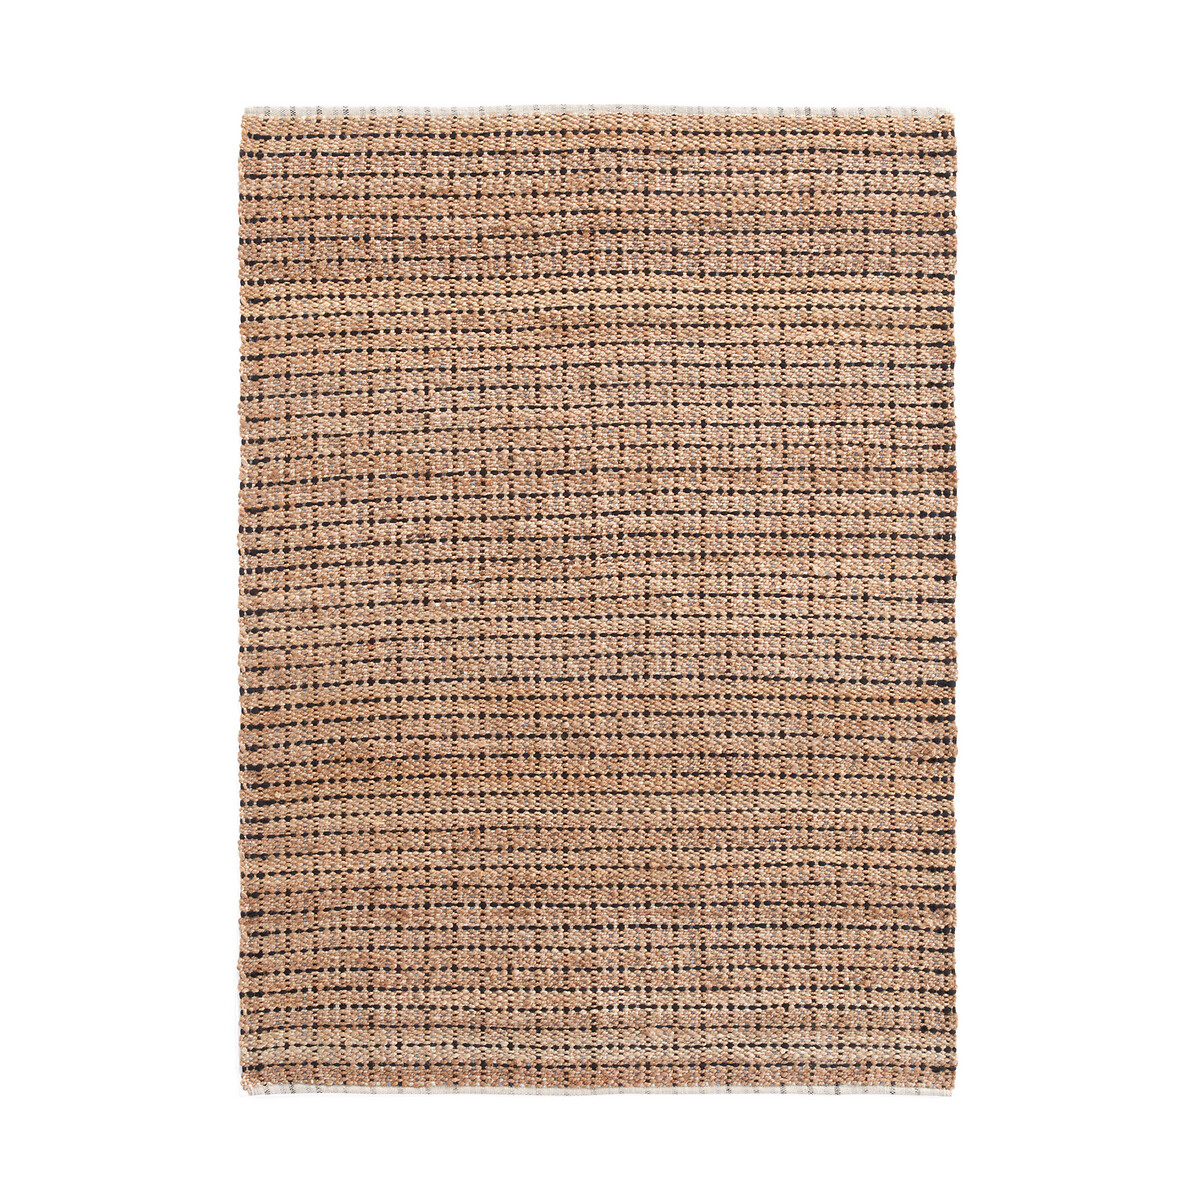 Ковер LaRedoute Ручное плетение Chaffa 200 x 290 см другие, размер 200 x 290 см